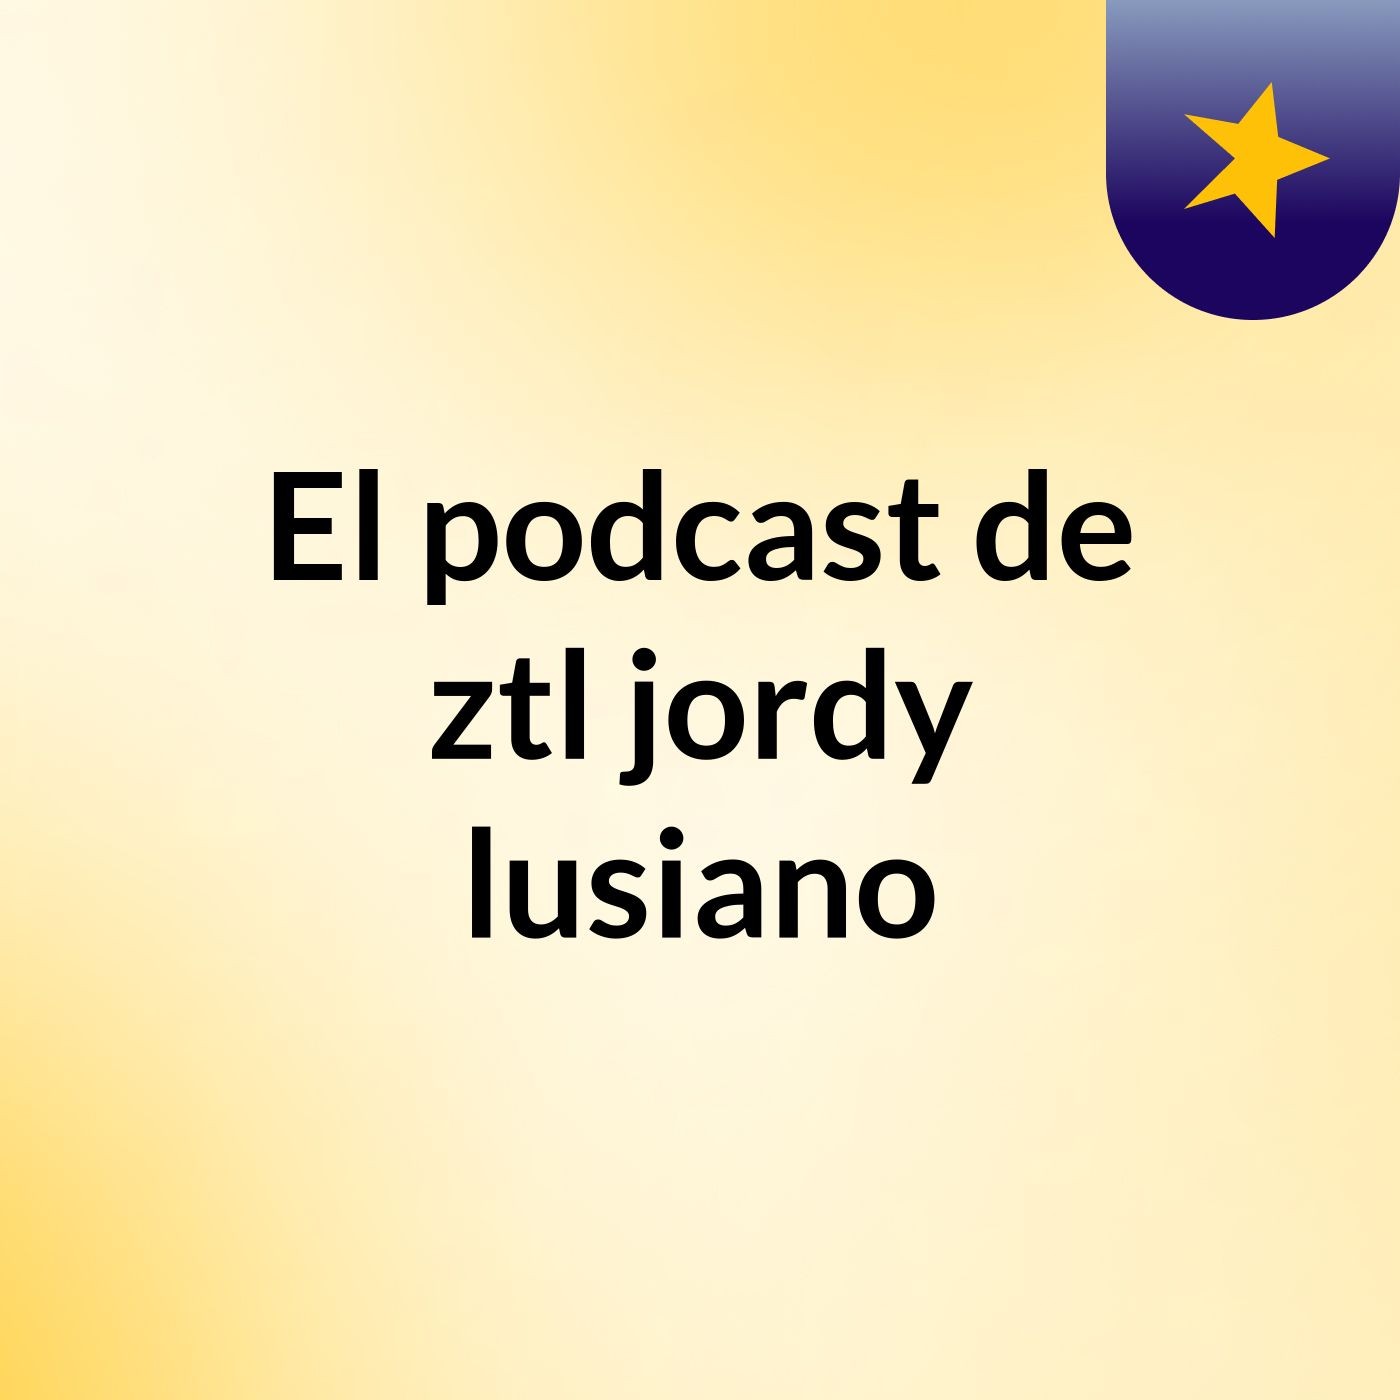 El podcast de ztl jordy lusiano